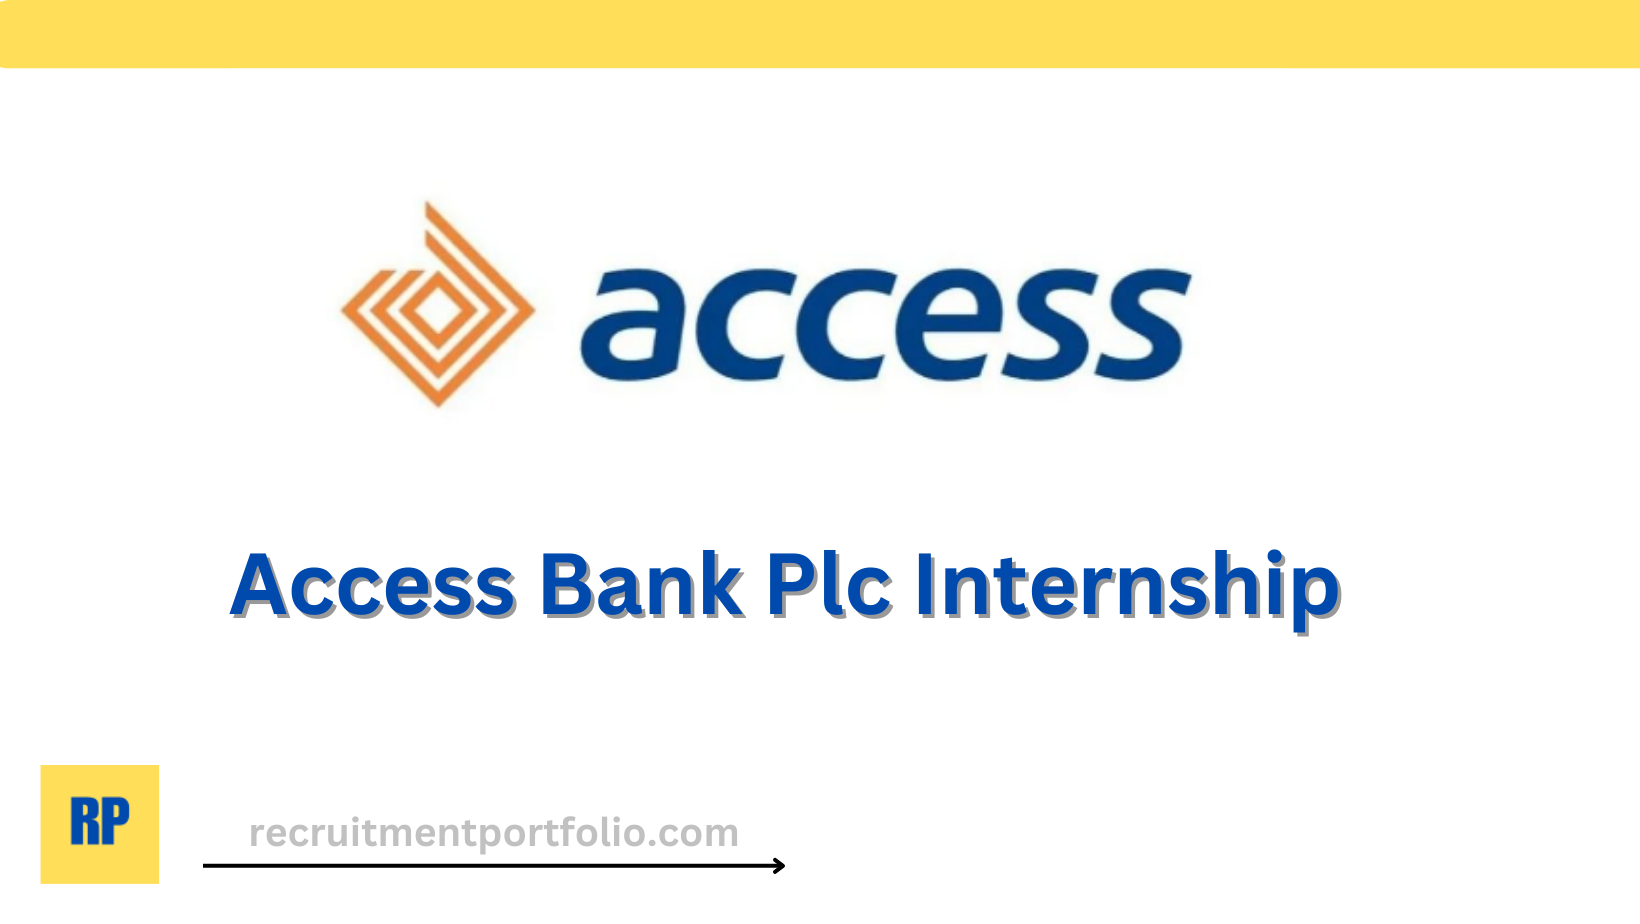 Access Bank Plc Internship